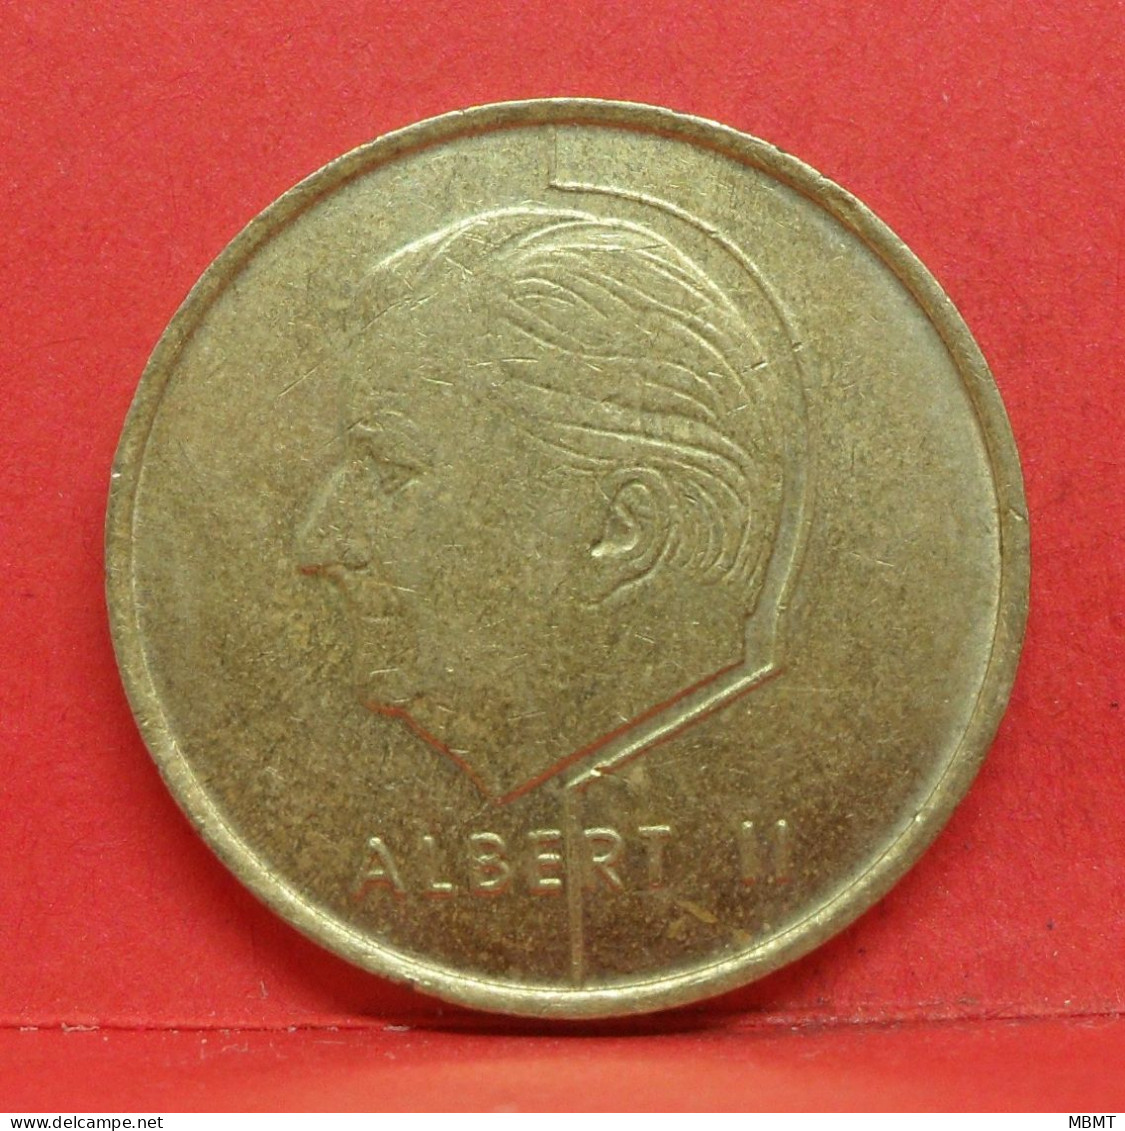 5 Frank 1998 - TTB - Pièce Monnaie Belgie - Article N°2009 - 5 Frank